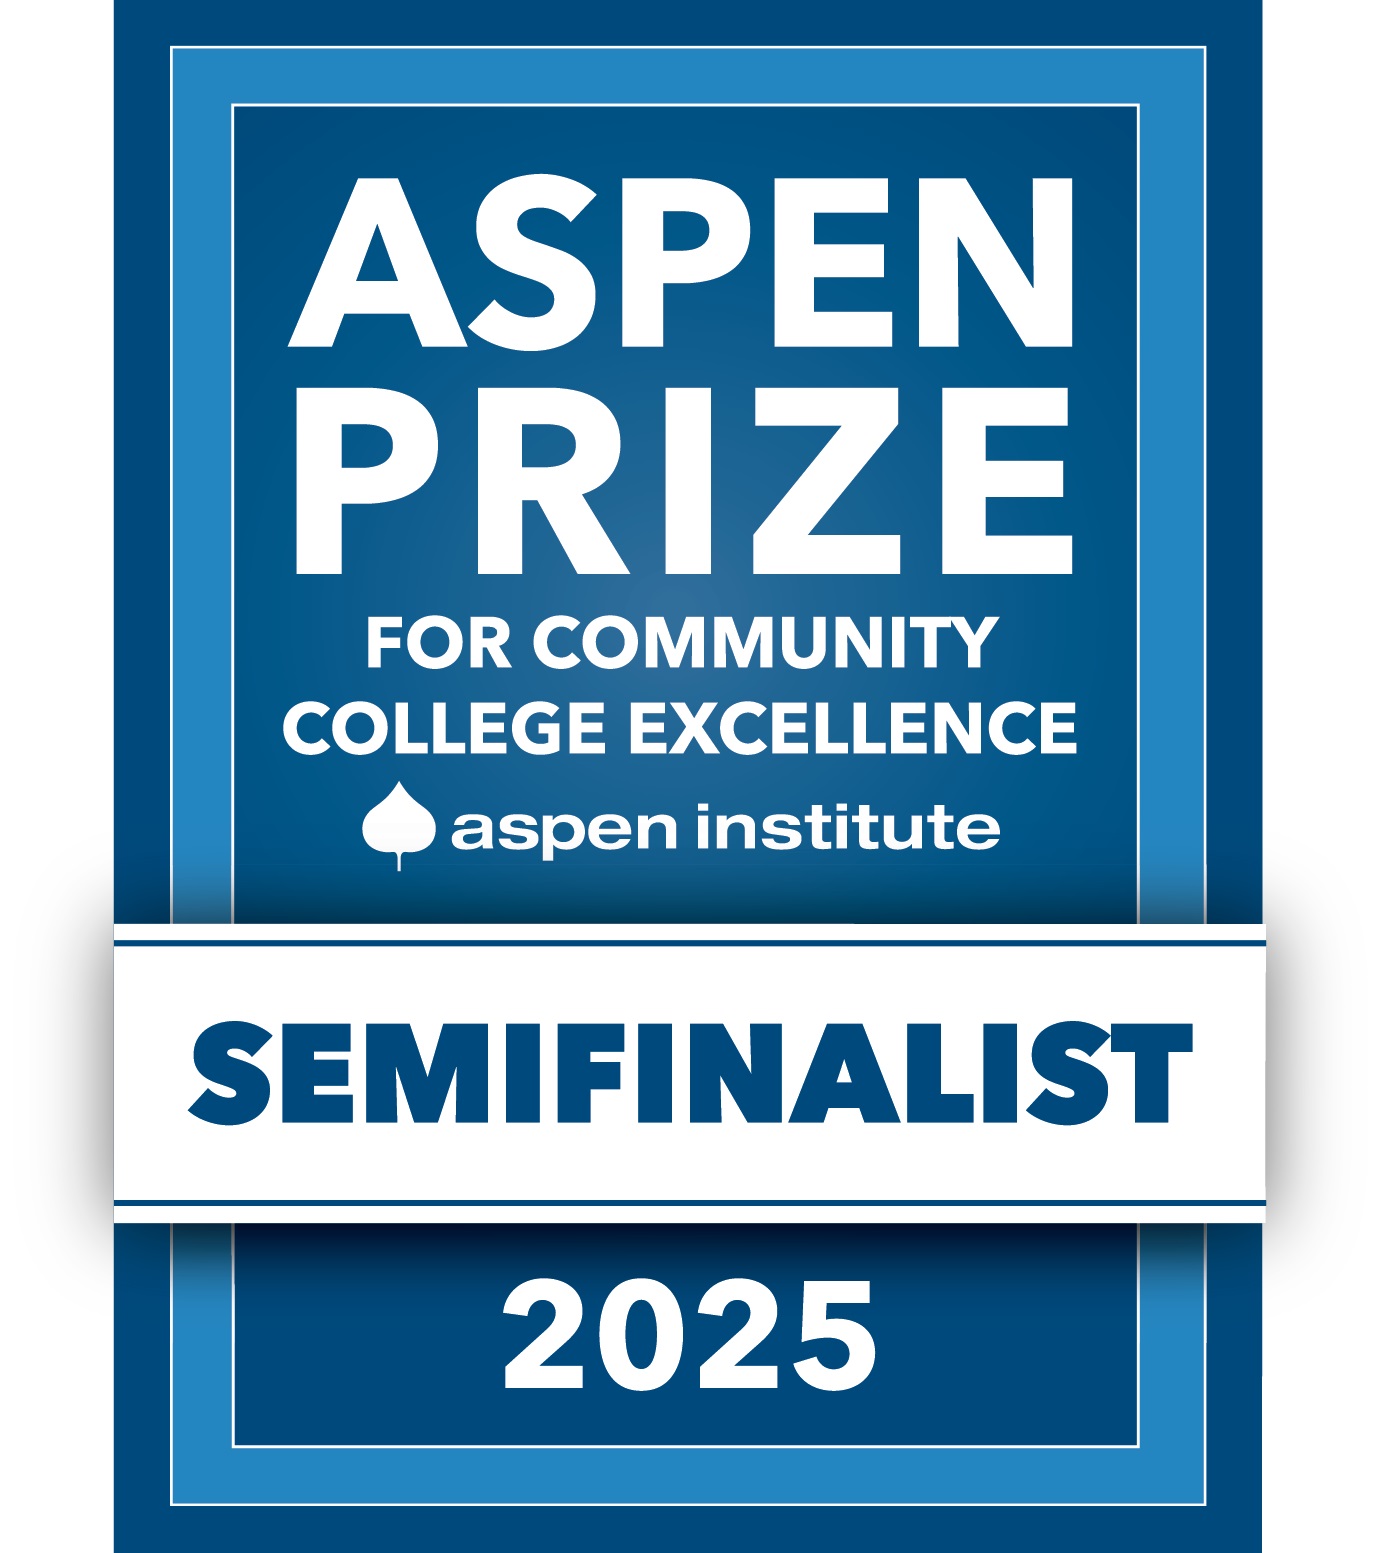 Aspen Prize Semifinalist 2025